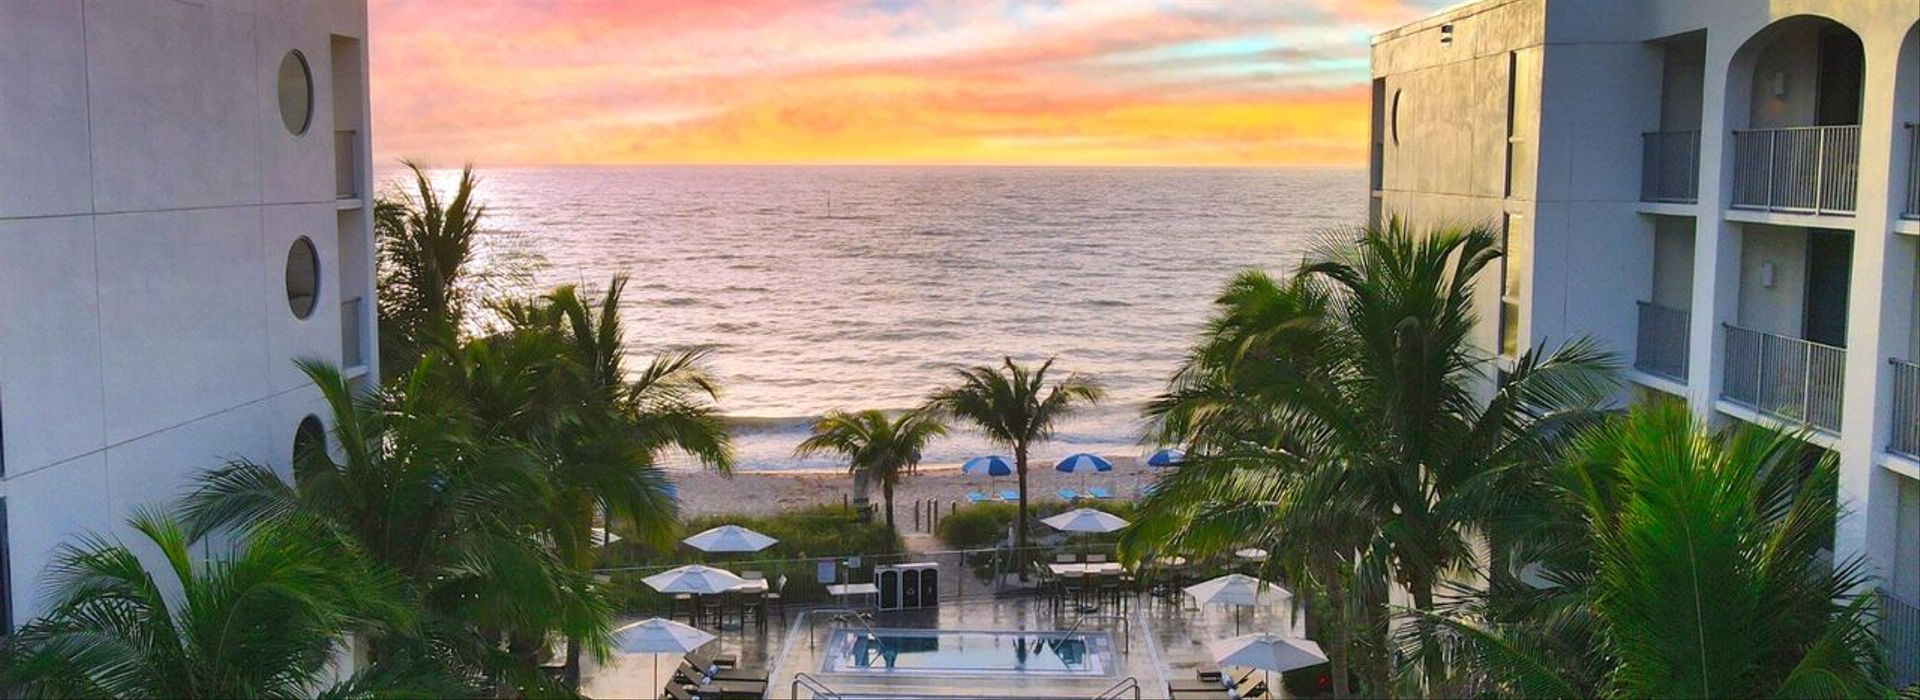 Costa d'Este Beach Resort & Spa.jpeg